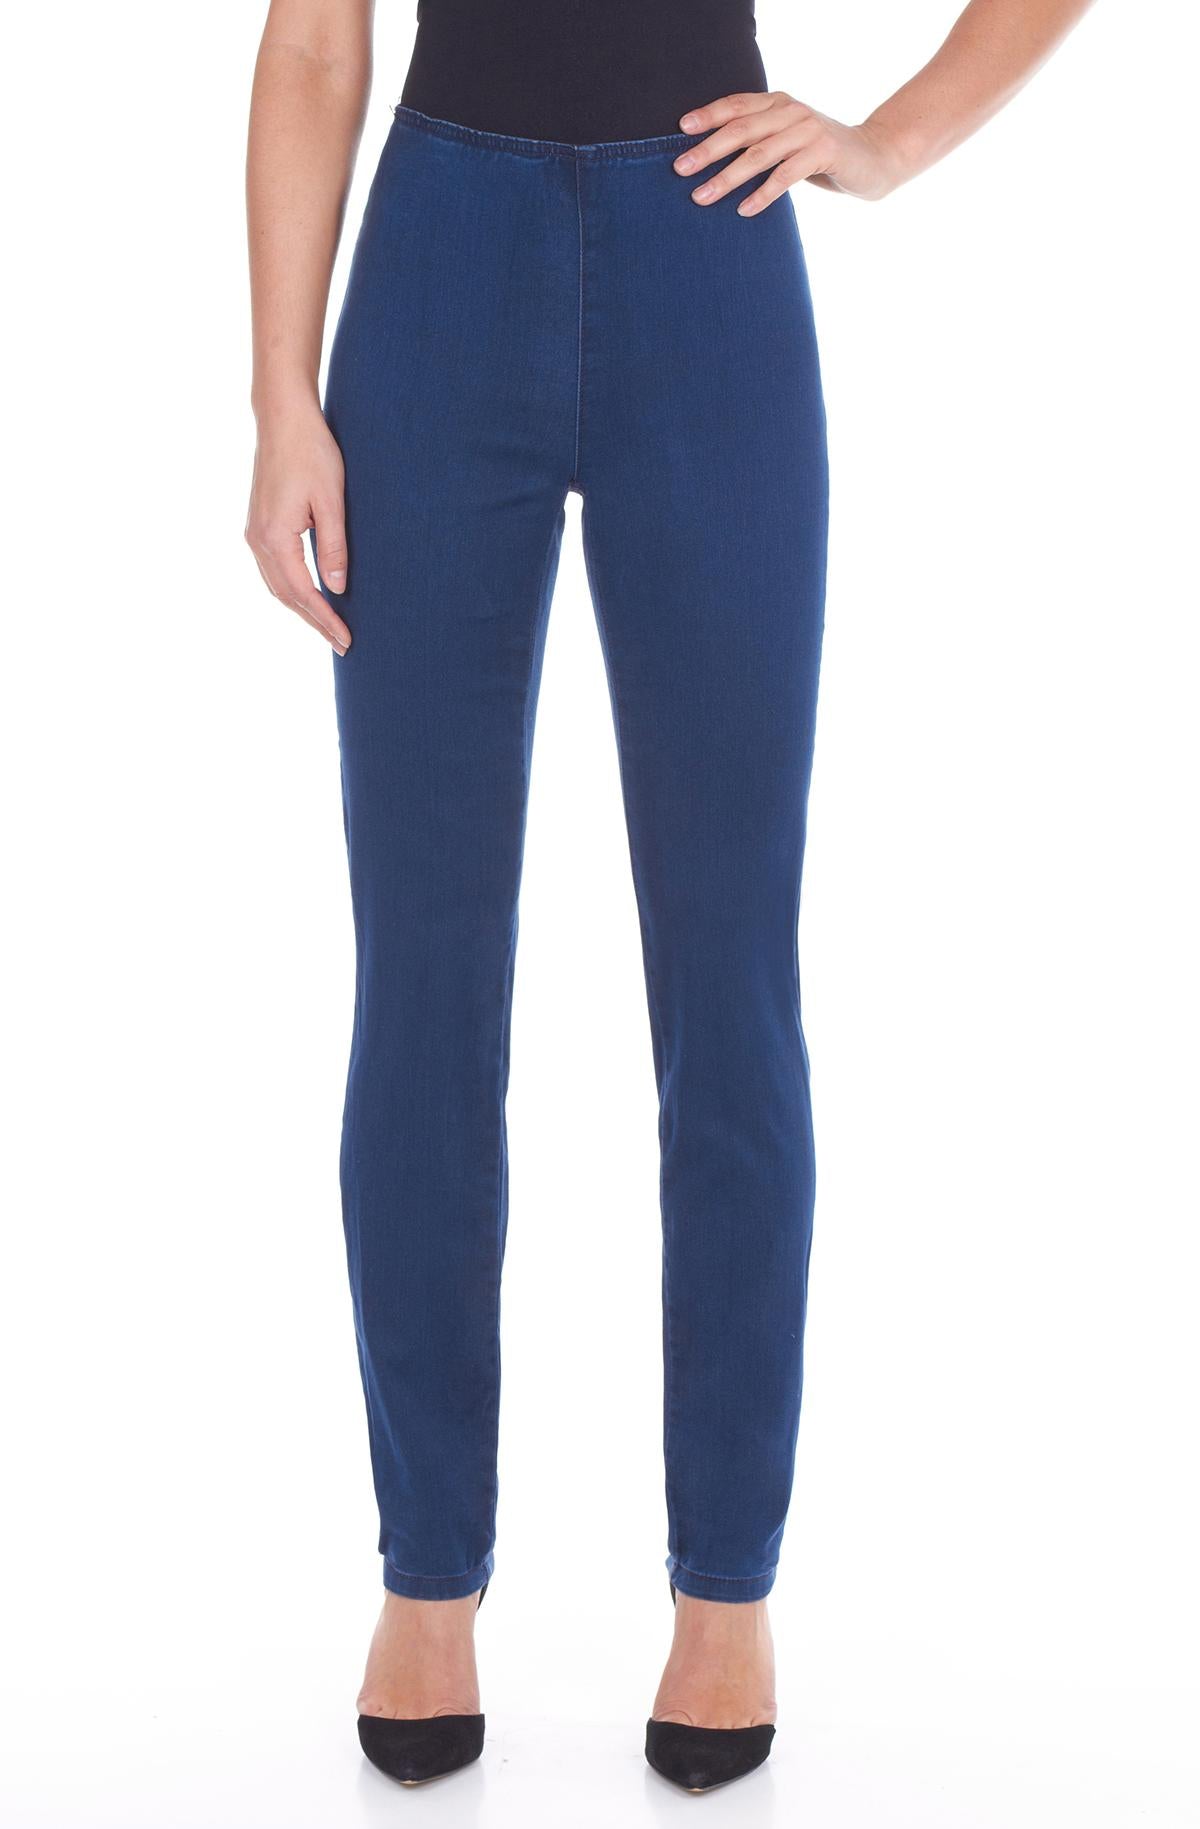 French Dressing Jeans Pull-On Super Jegging D-LUX Denim 